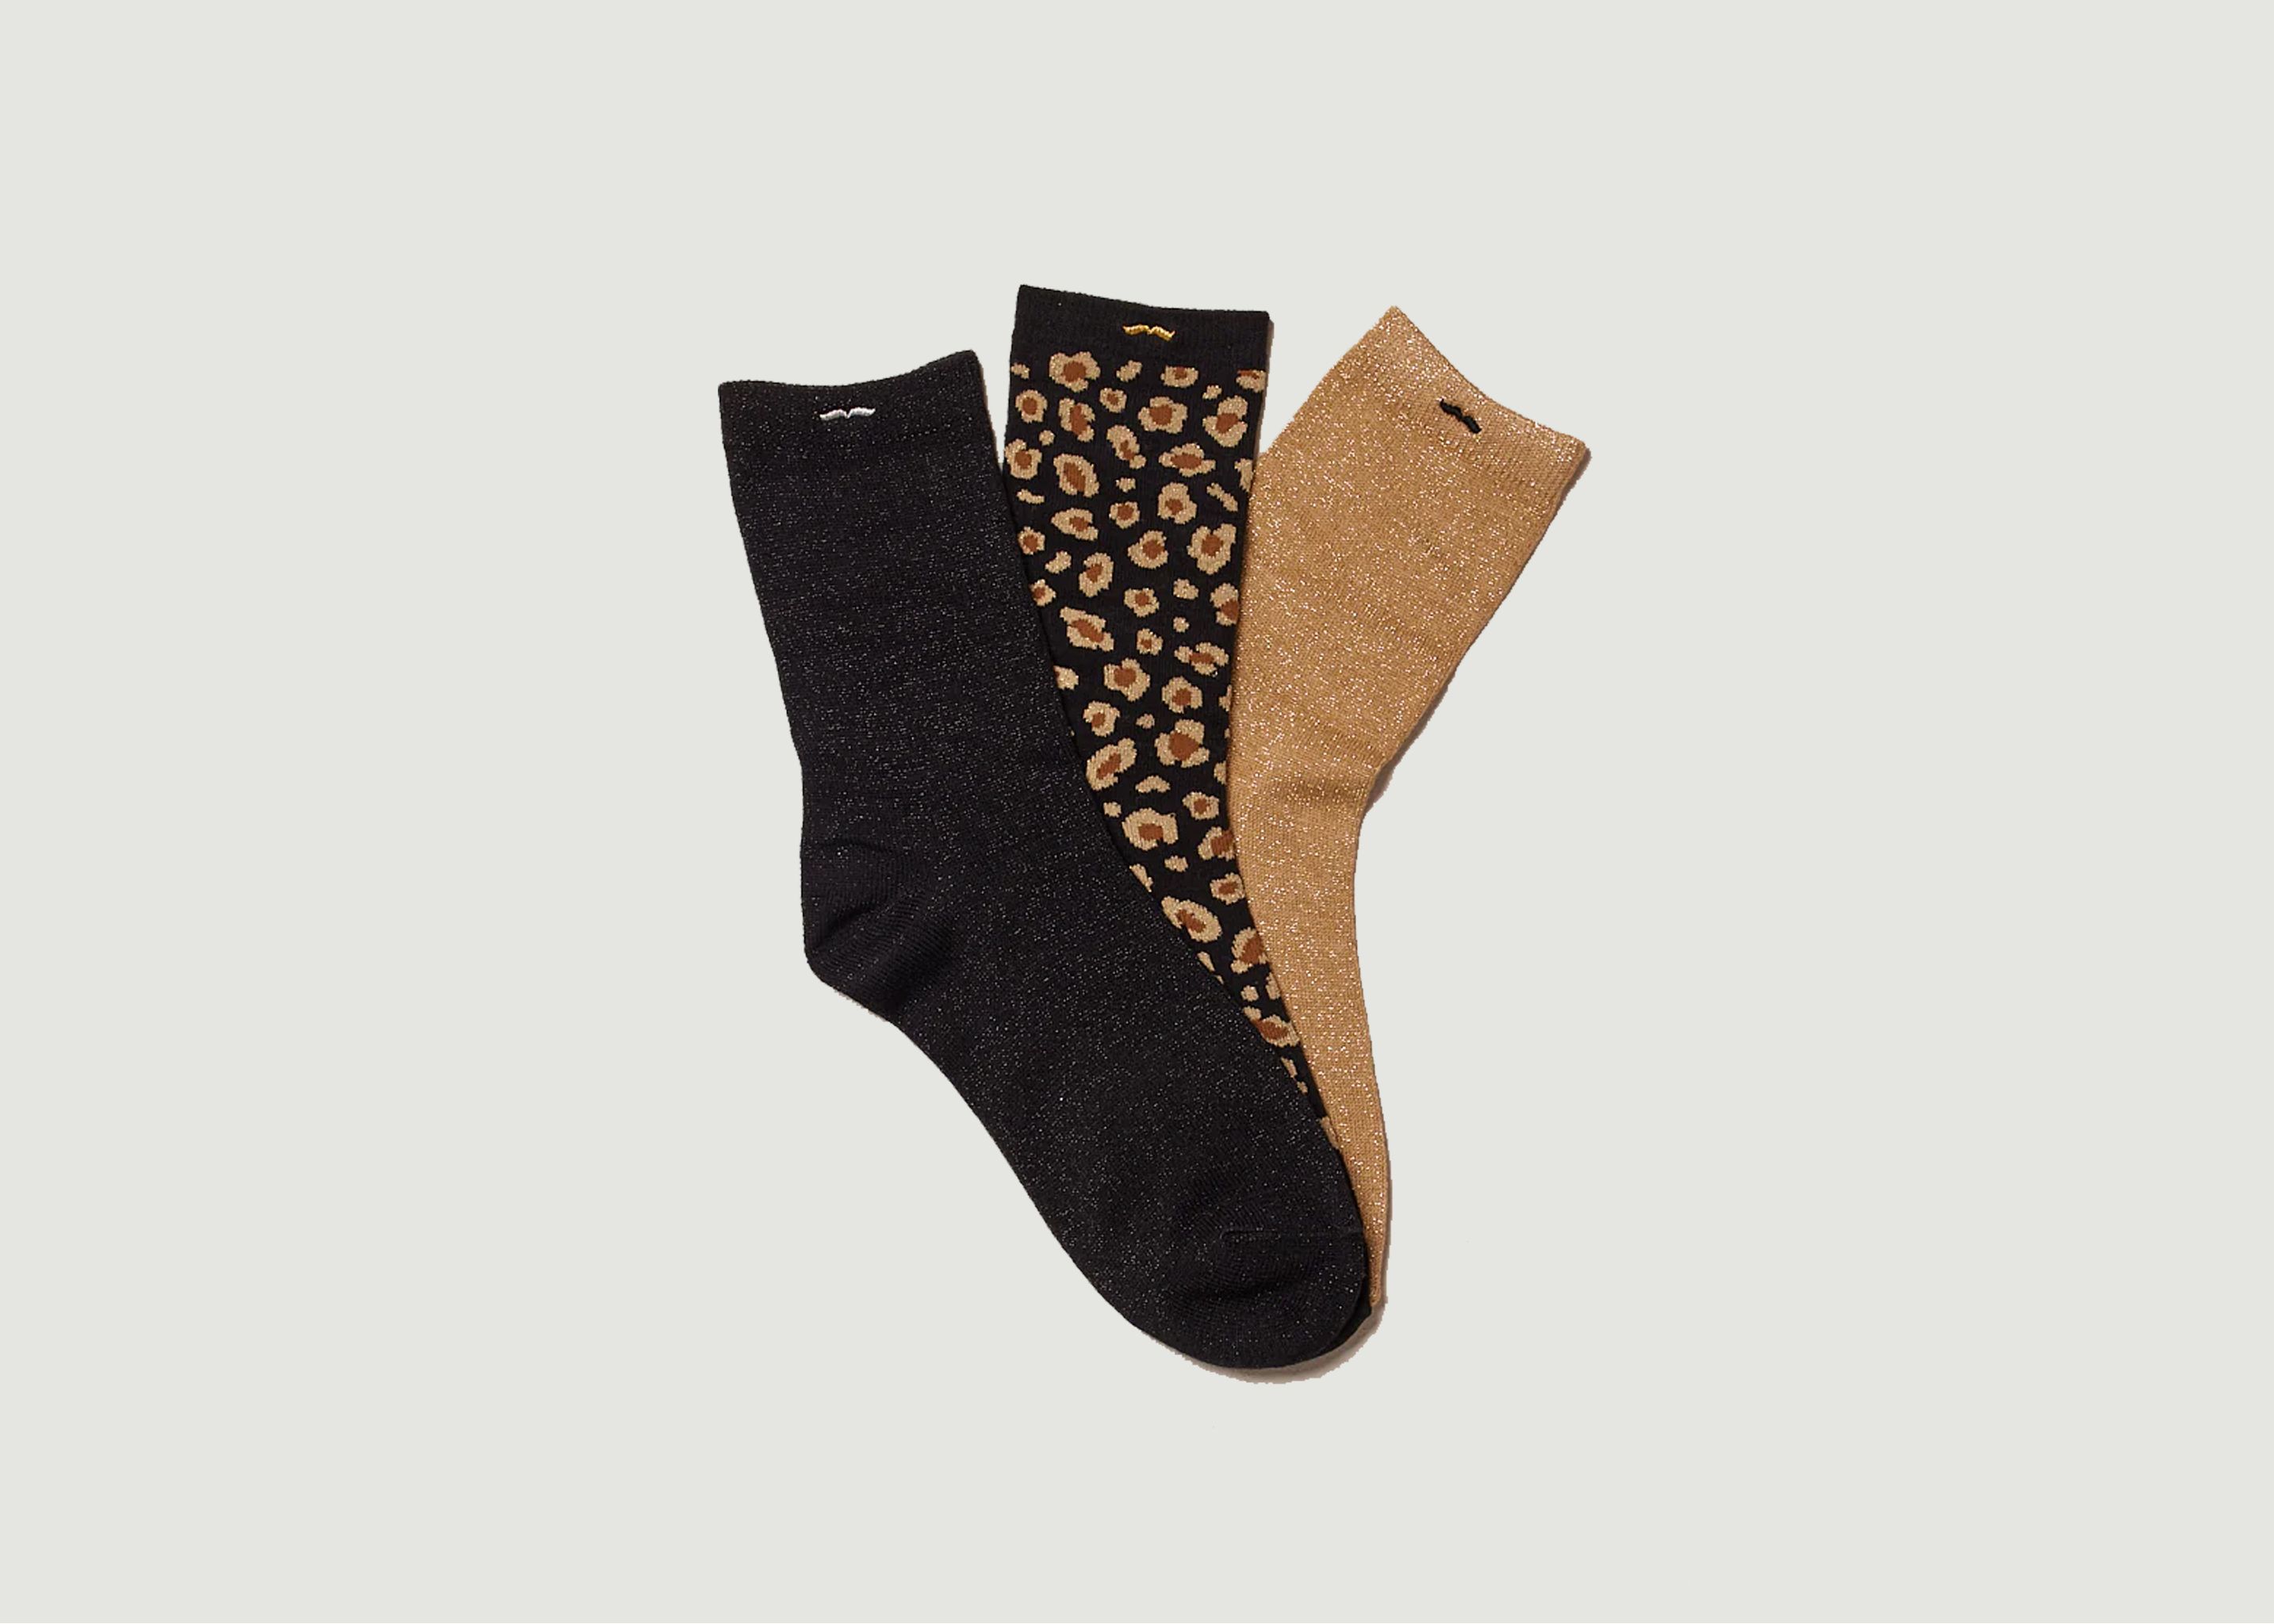 Pack of 3 glossy leopard print socks - M.Moustache